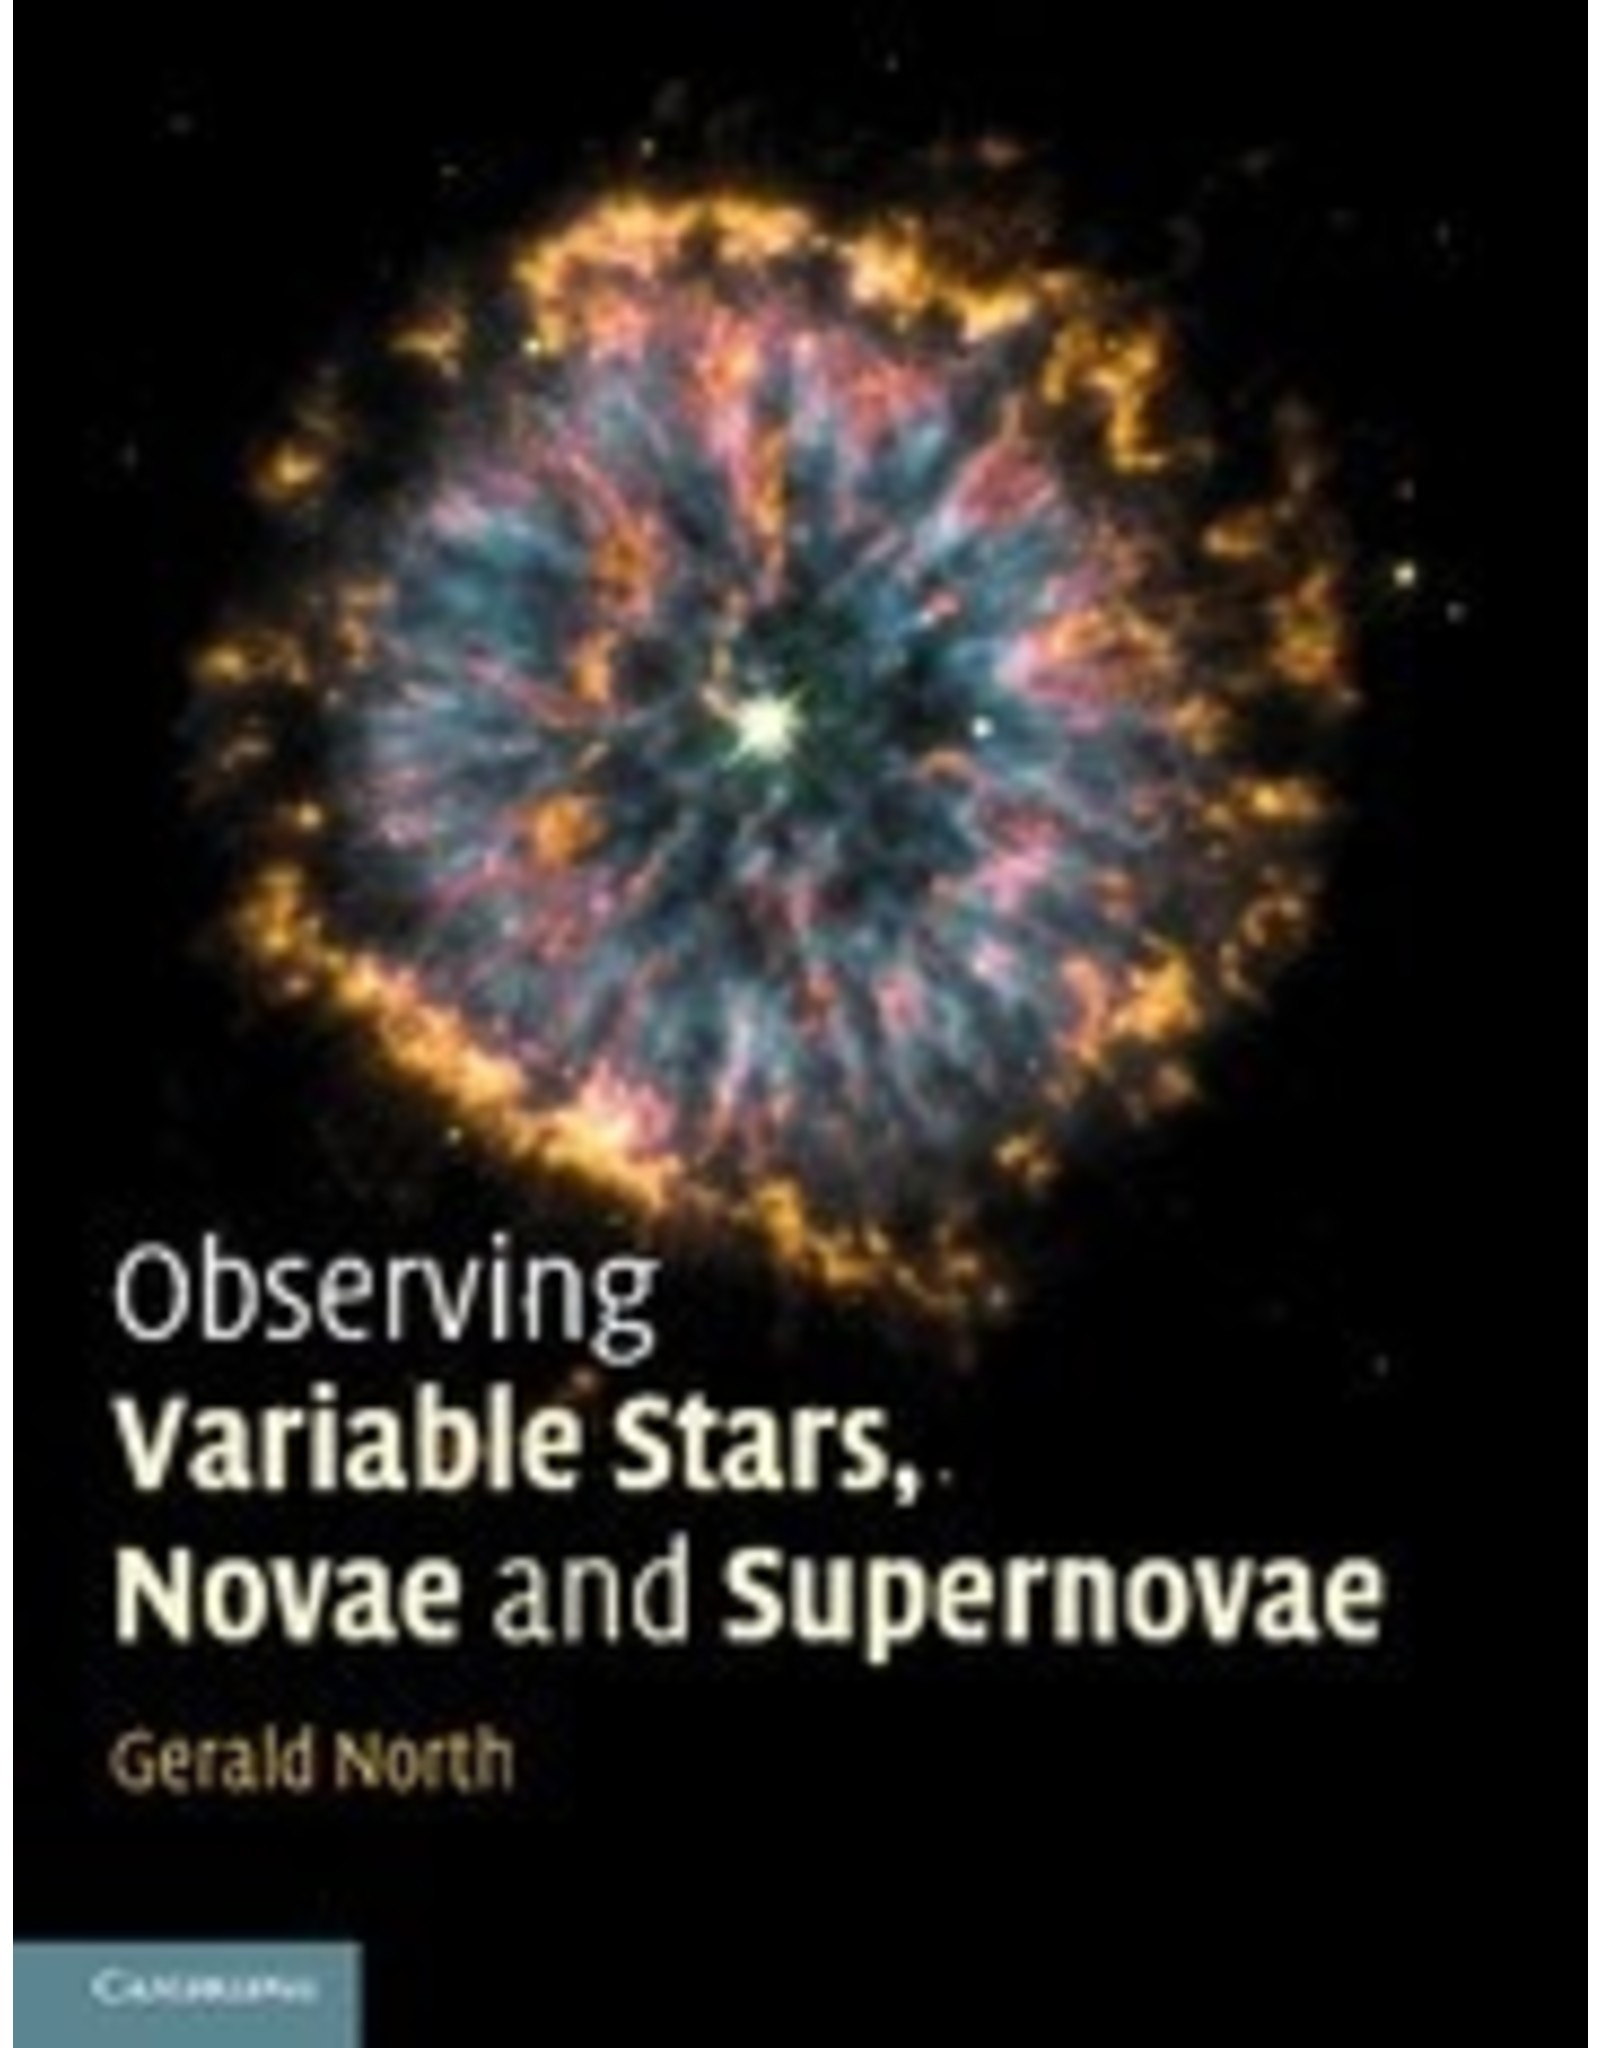 Cambridge Observing variable stars novae and supernovae